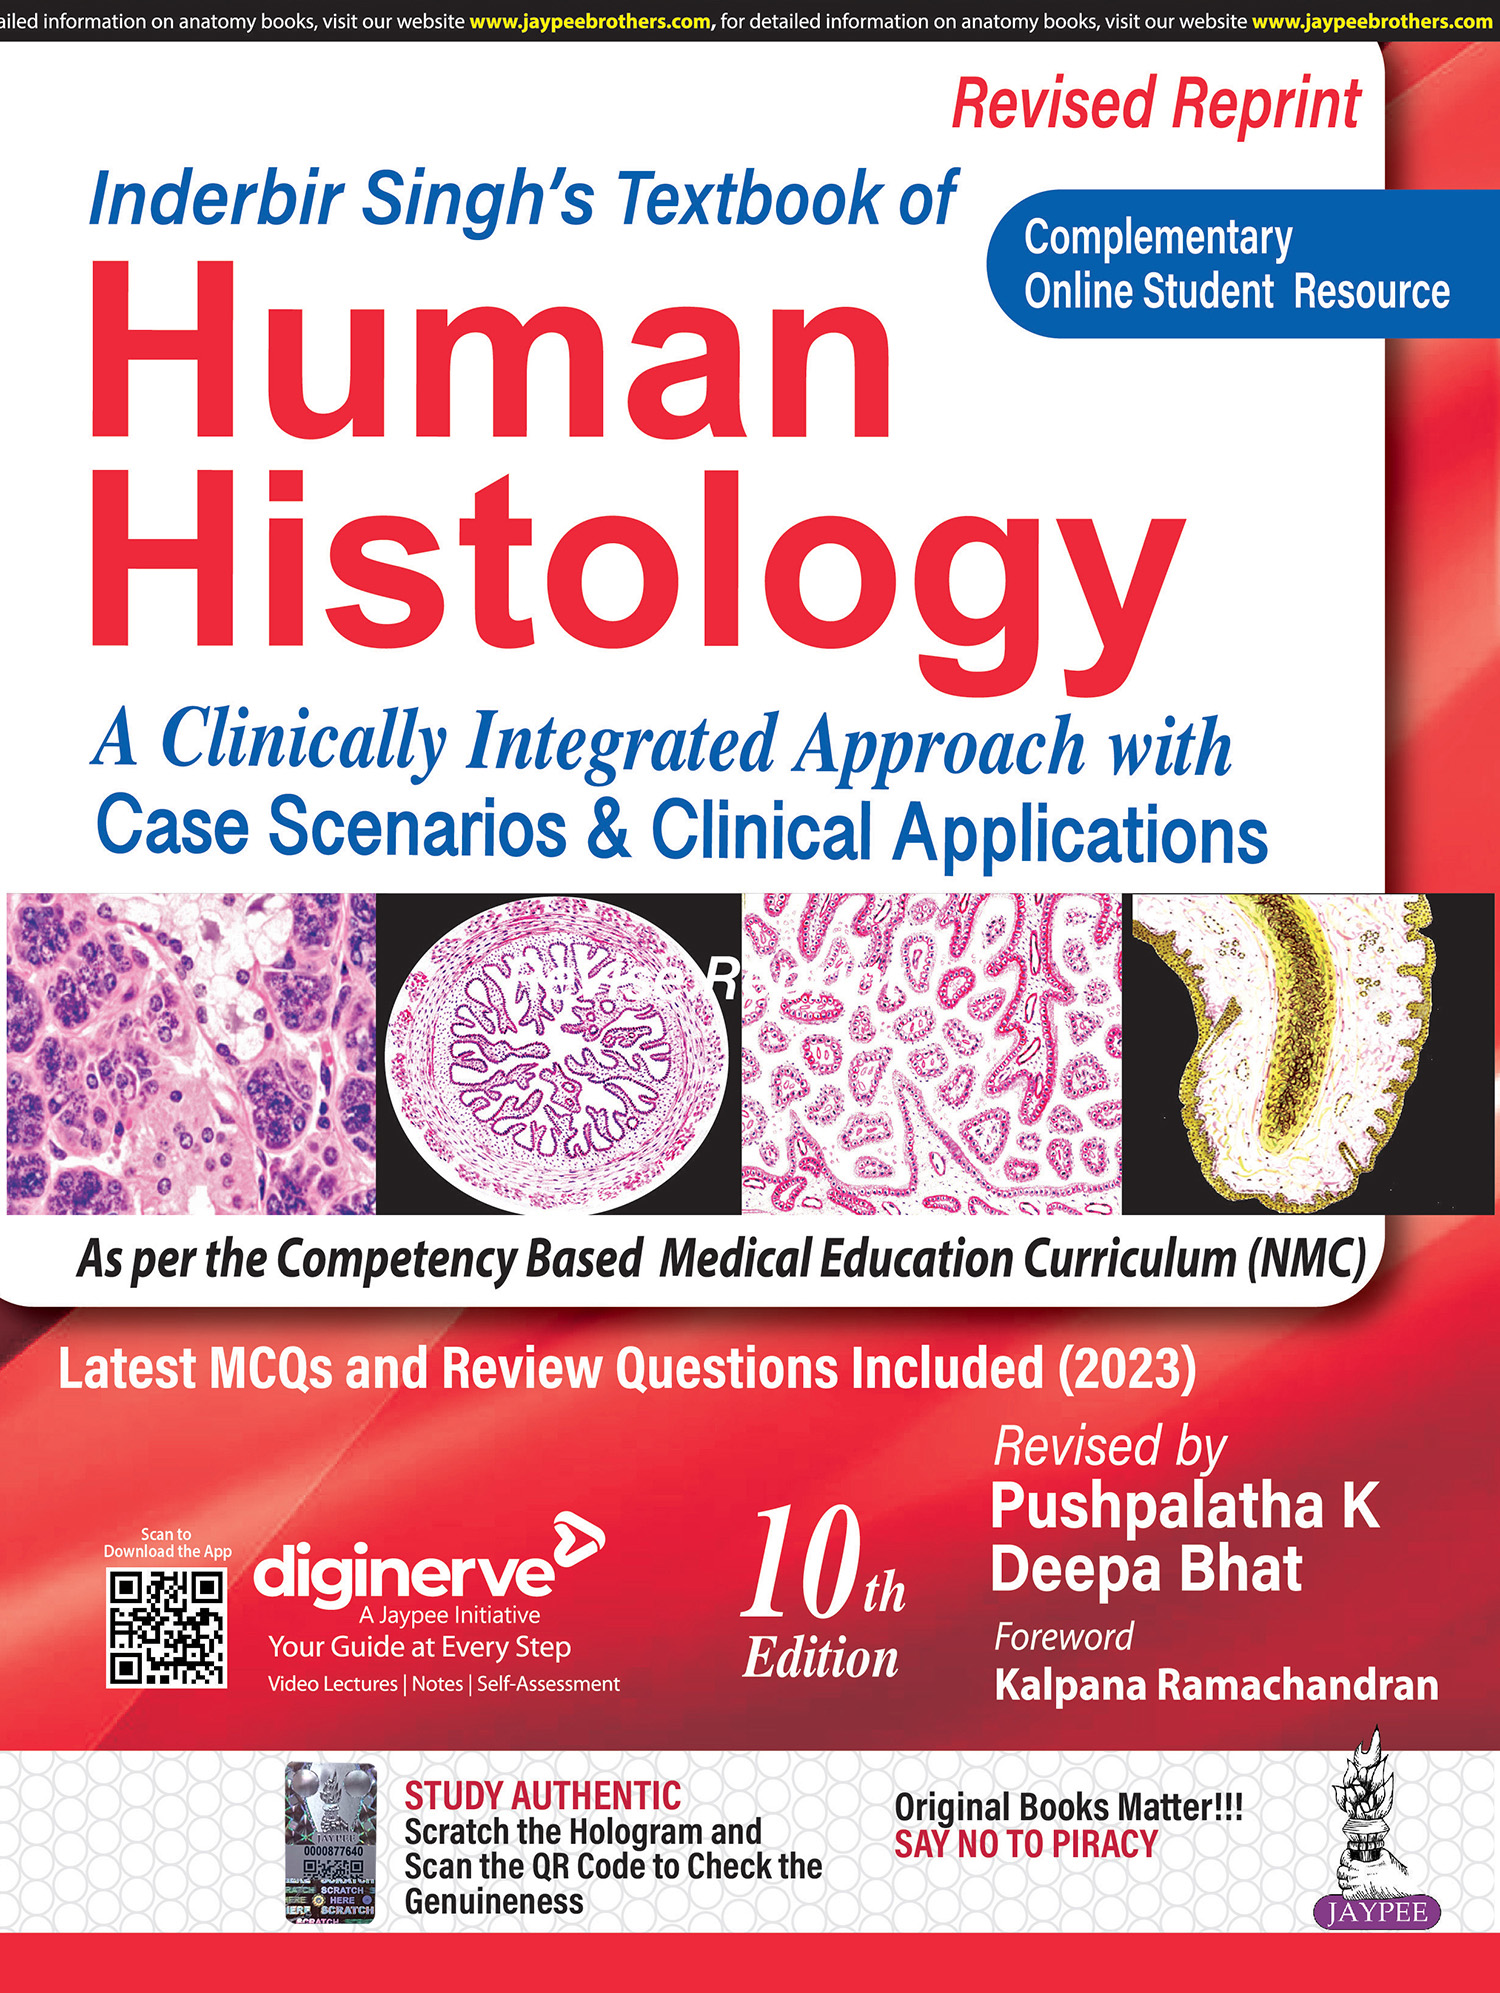 Inderbir Singh’s Textbook of Human Histology